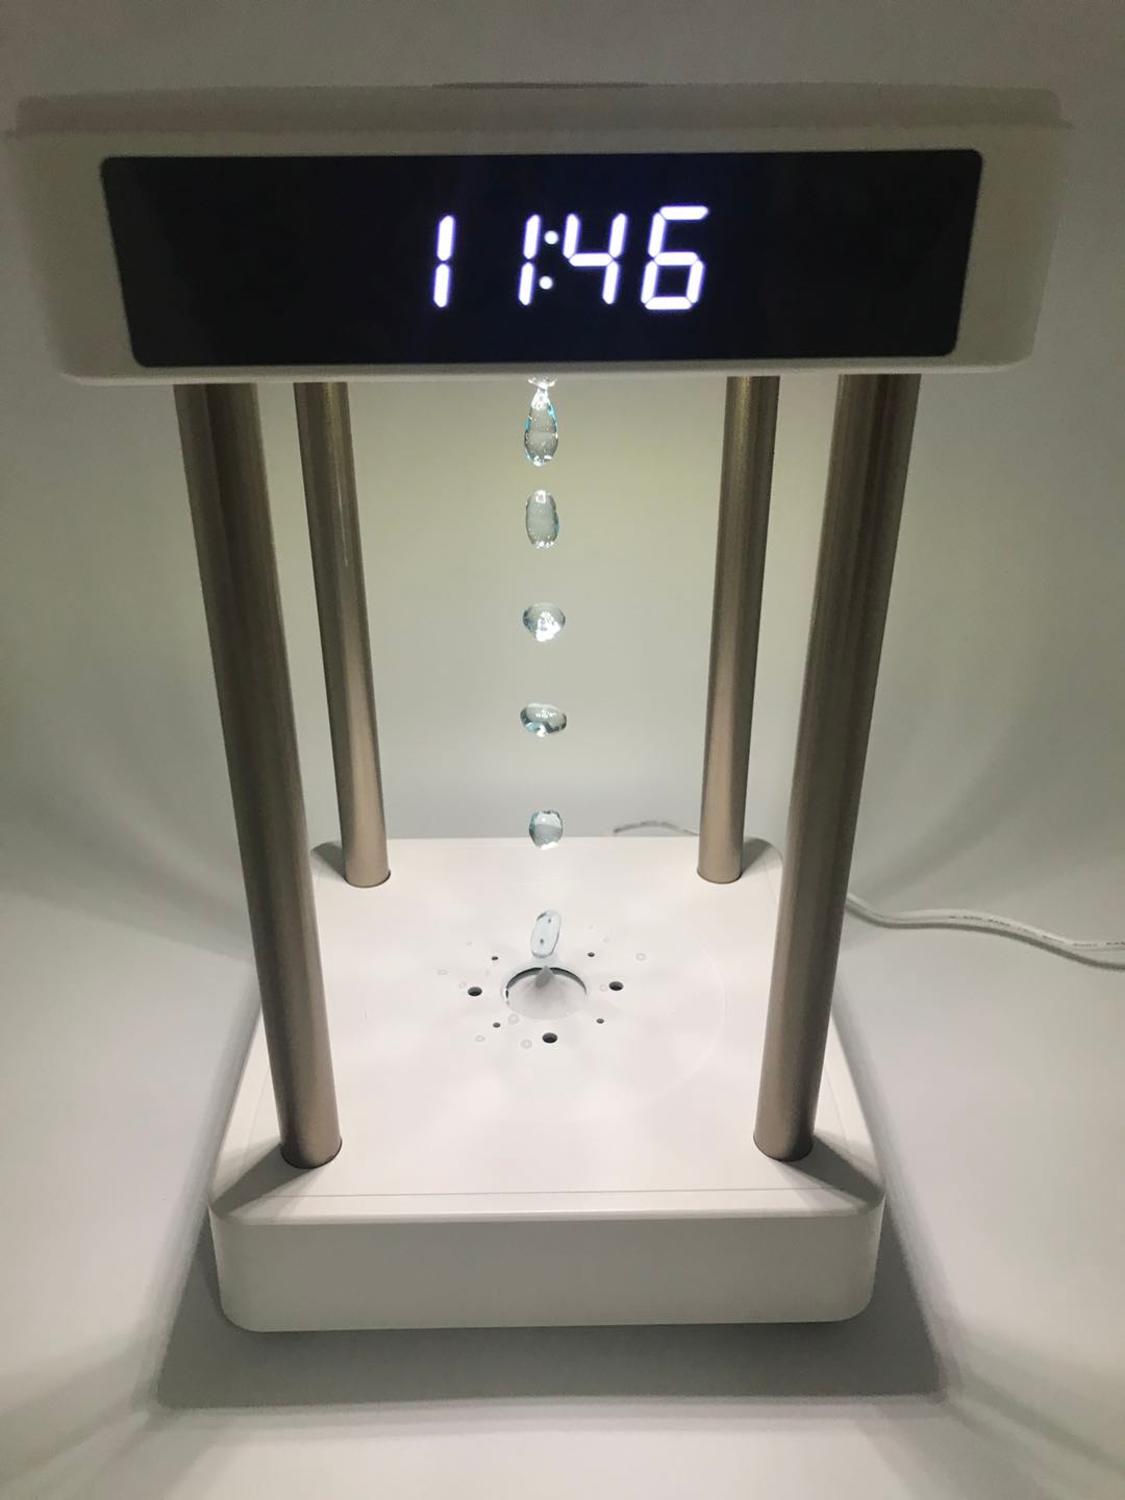 Clock / Anti Gravity Levitating Water Drops